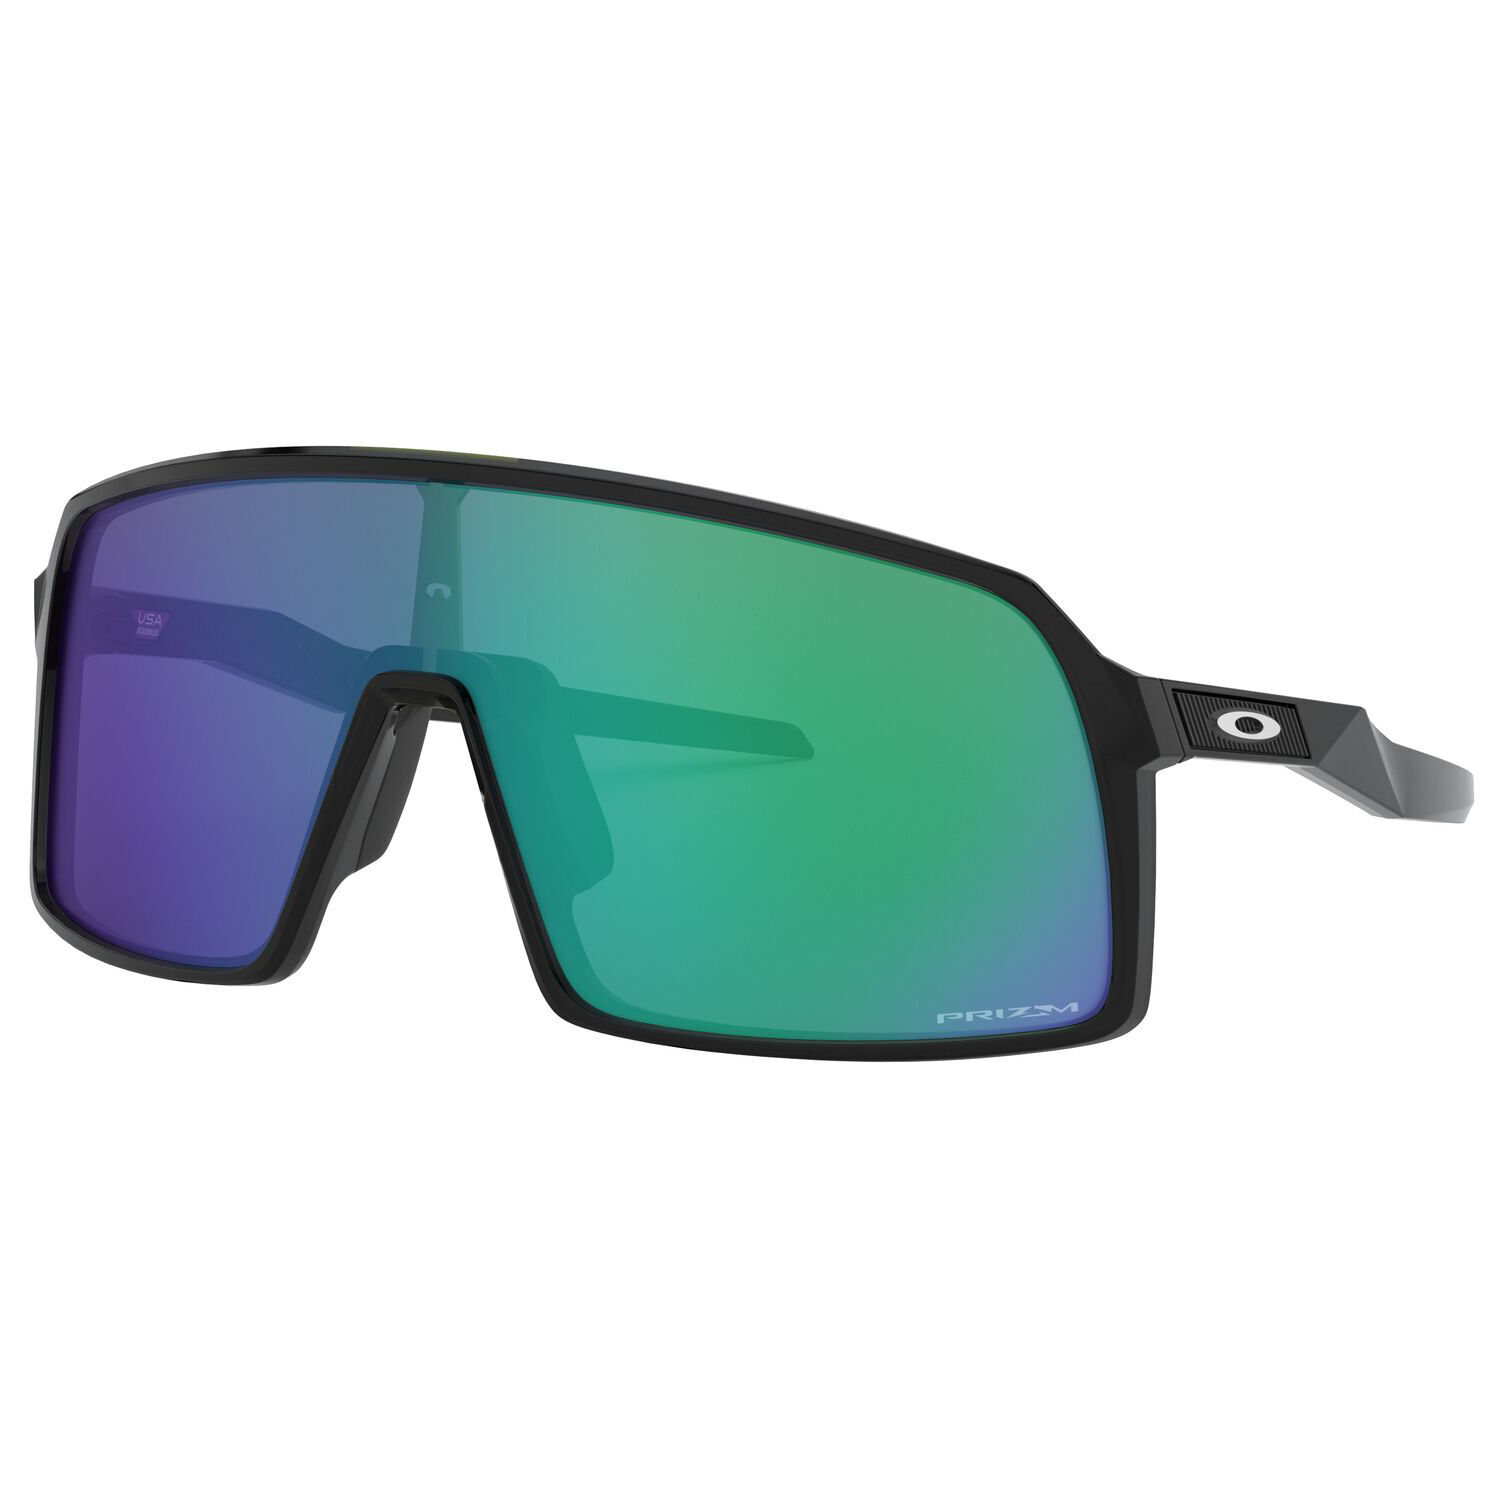 Buy Transmit Men - 400% UV Protection Black 55 mm Polarizsed Lens Metal  material Square Sunglasses at Amazon.in